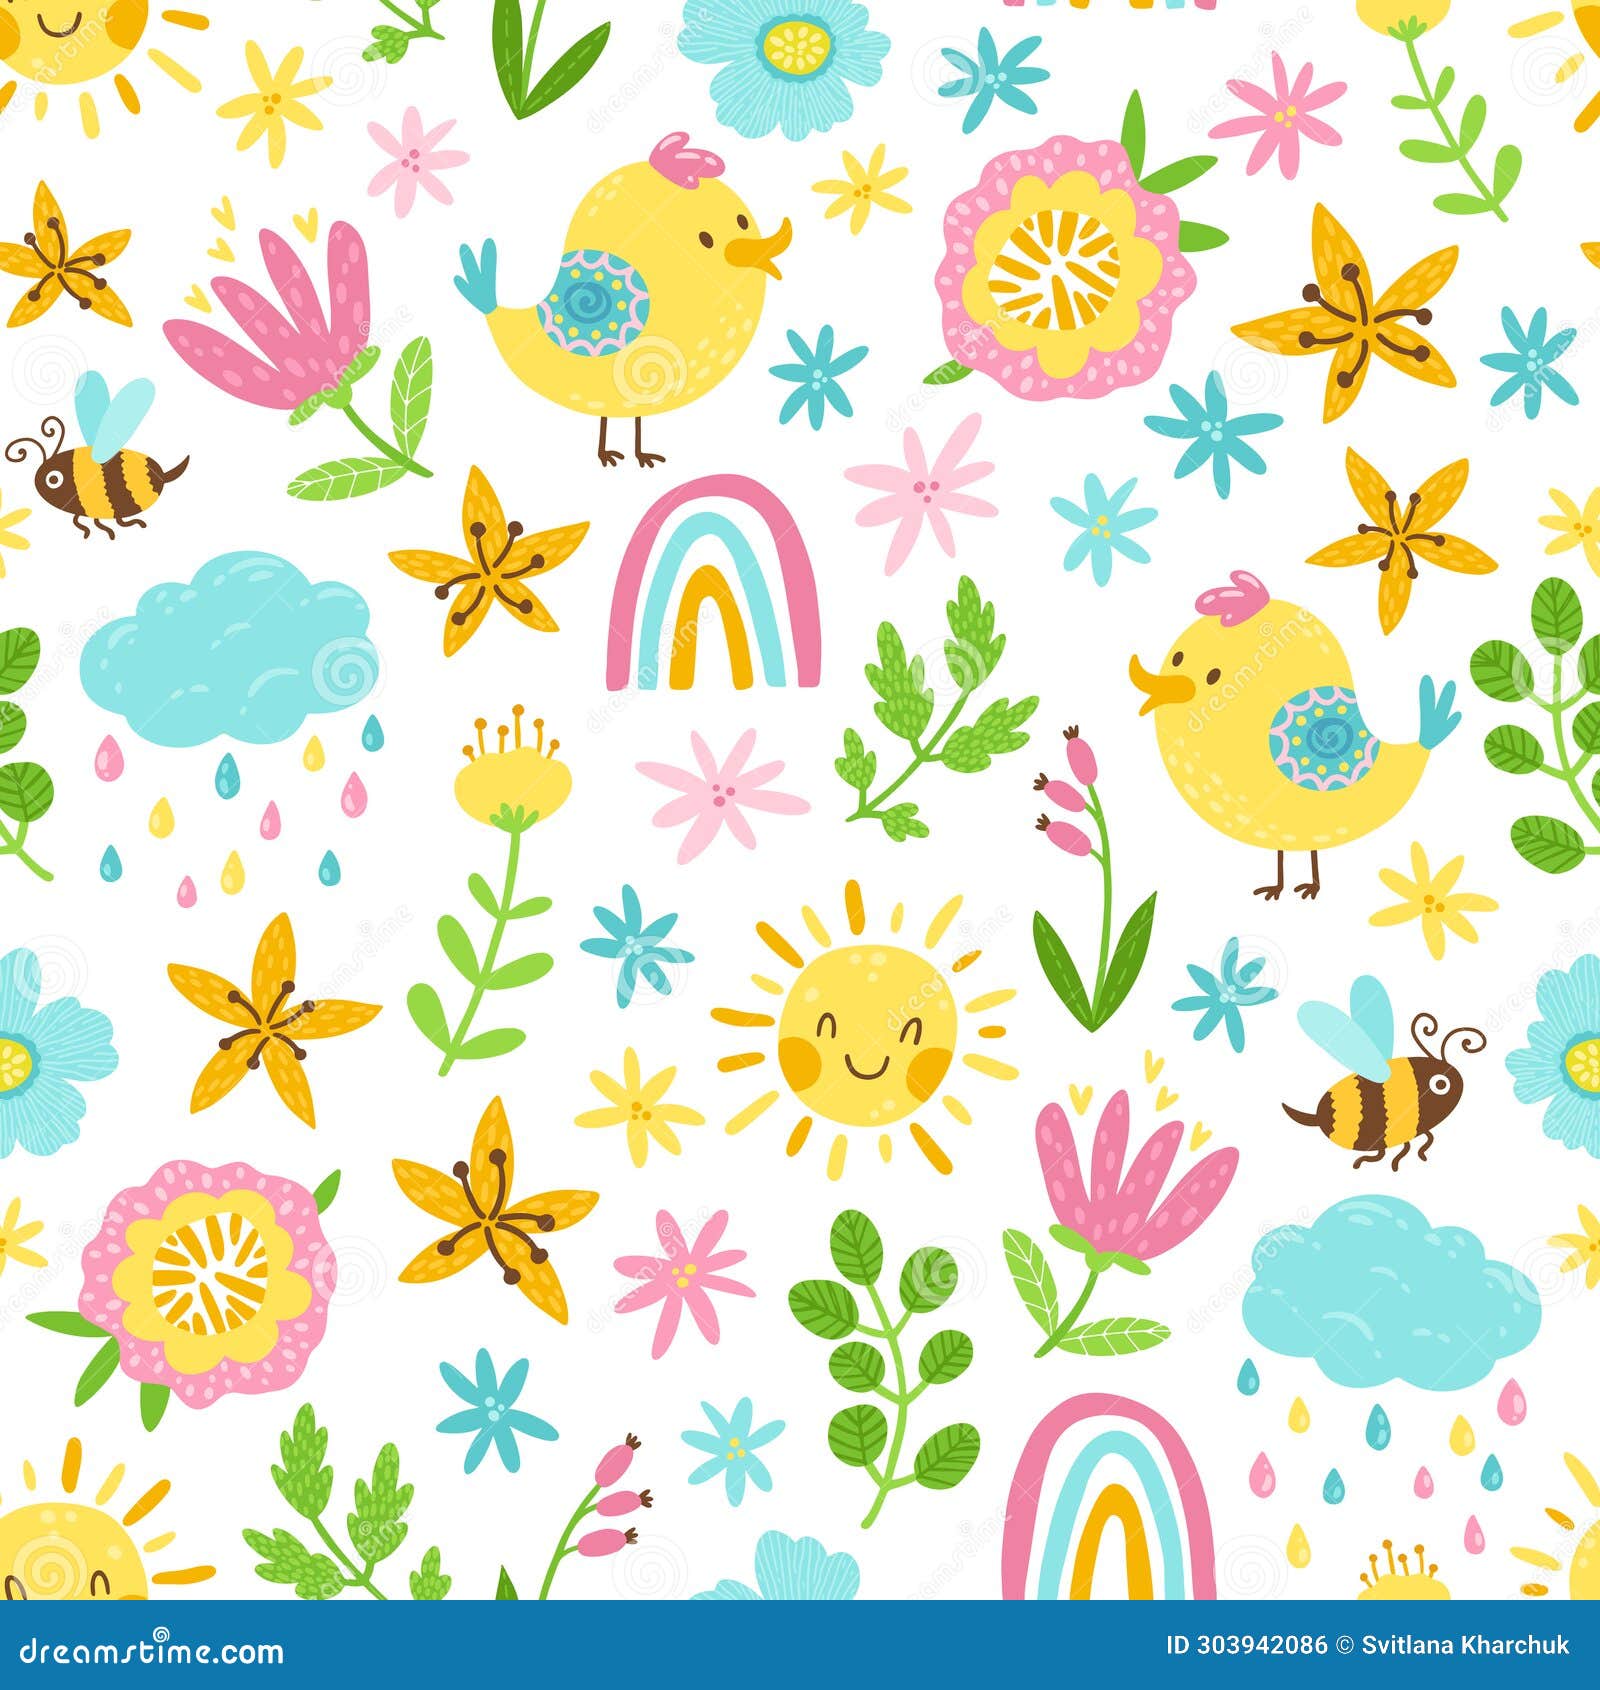 Spring Clip Art-rainbow simple cartoon style covered with flowersl